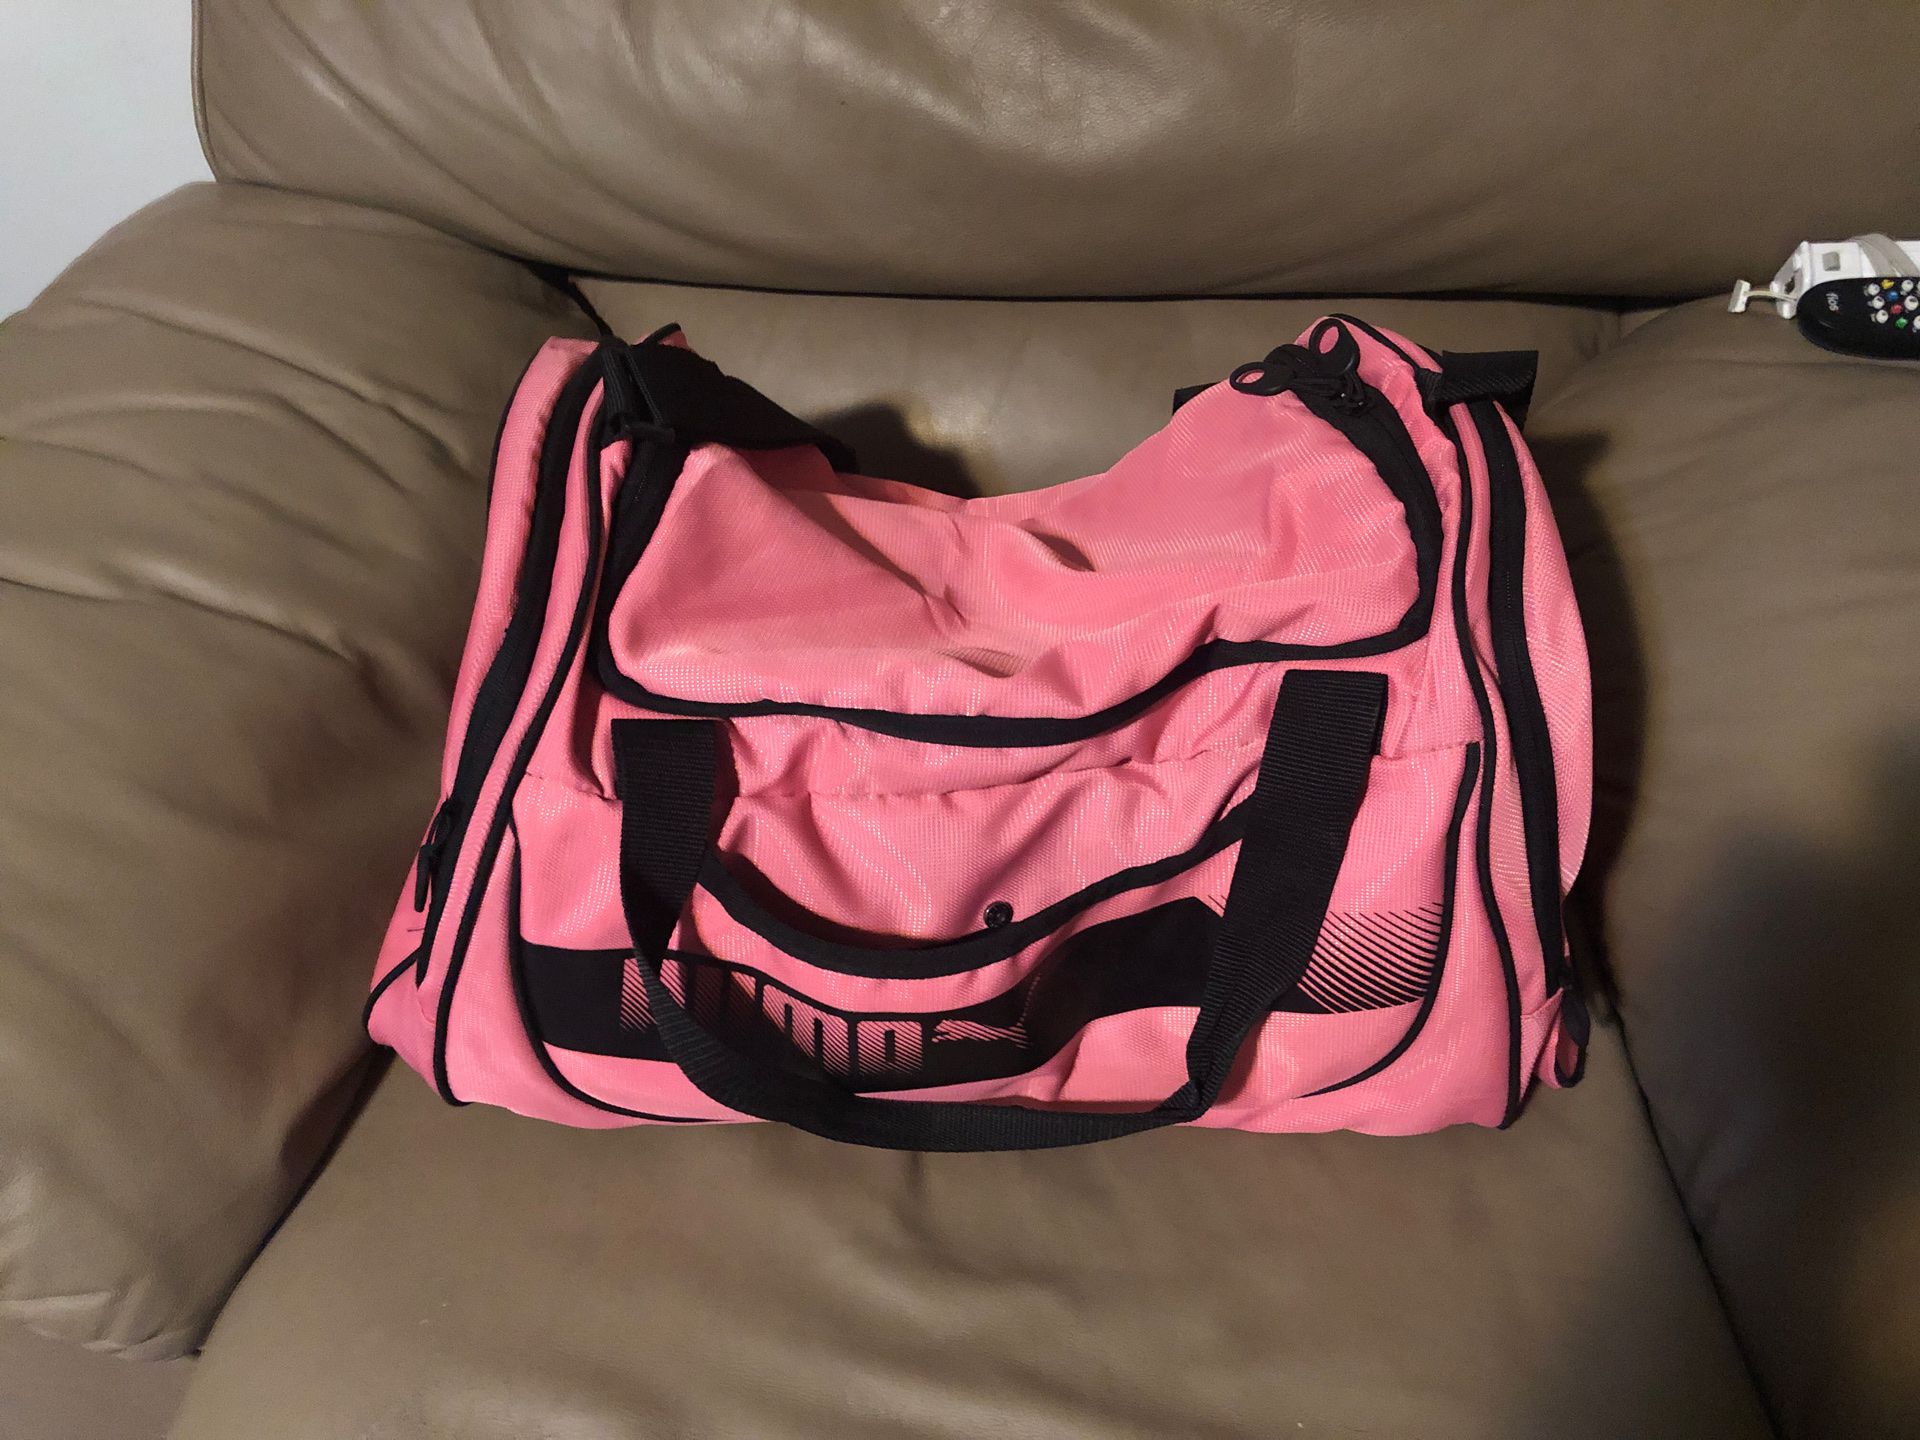 Puma pink duffle gym bag